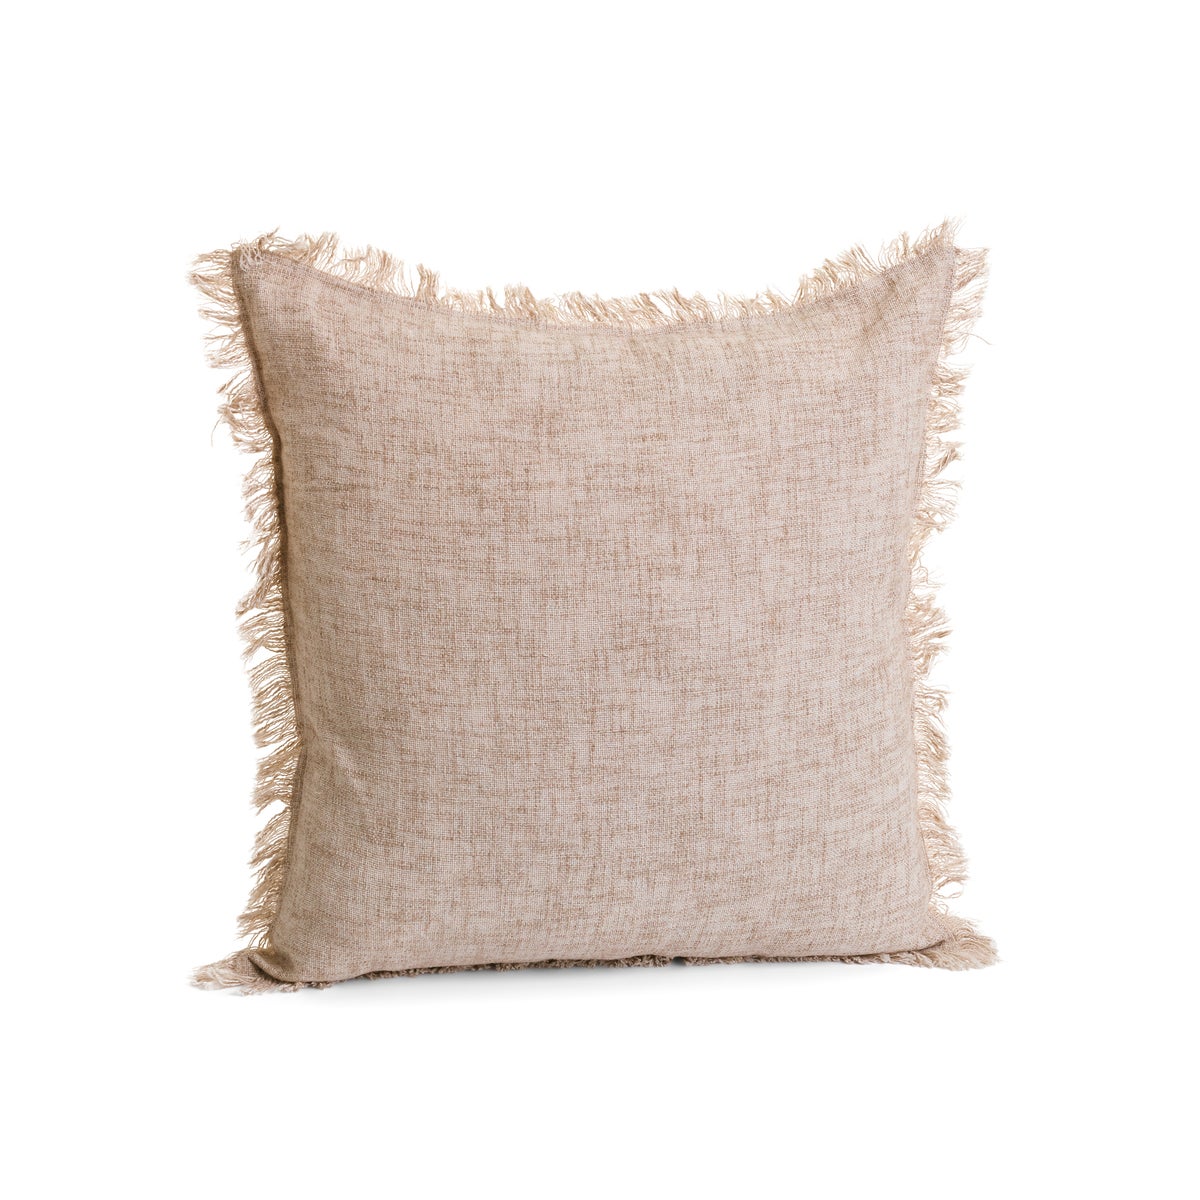 Milan Pillow Linen Cotton with Fringe Nat 24x24